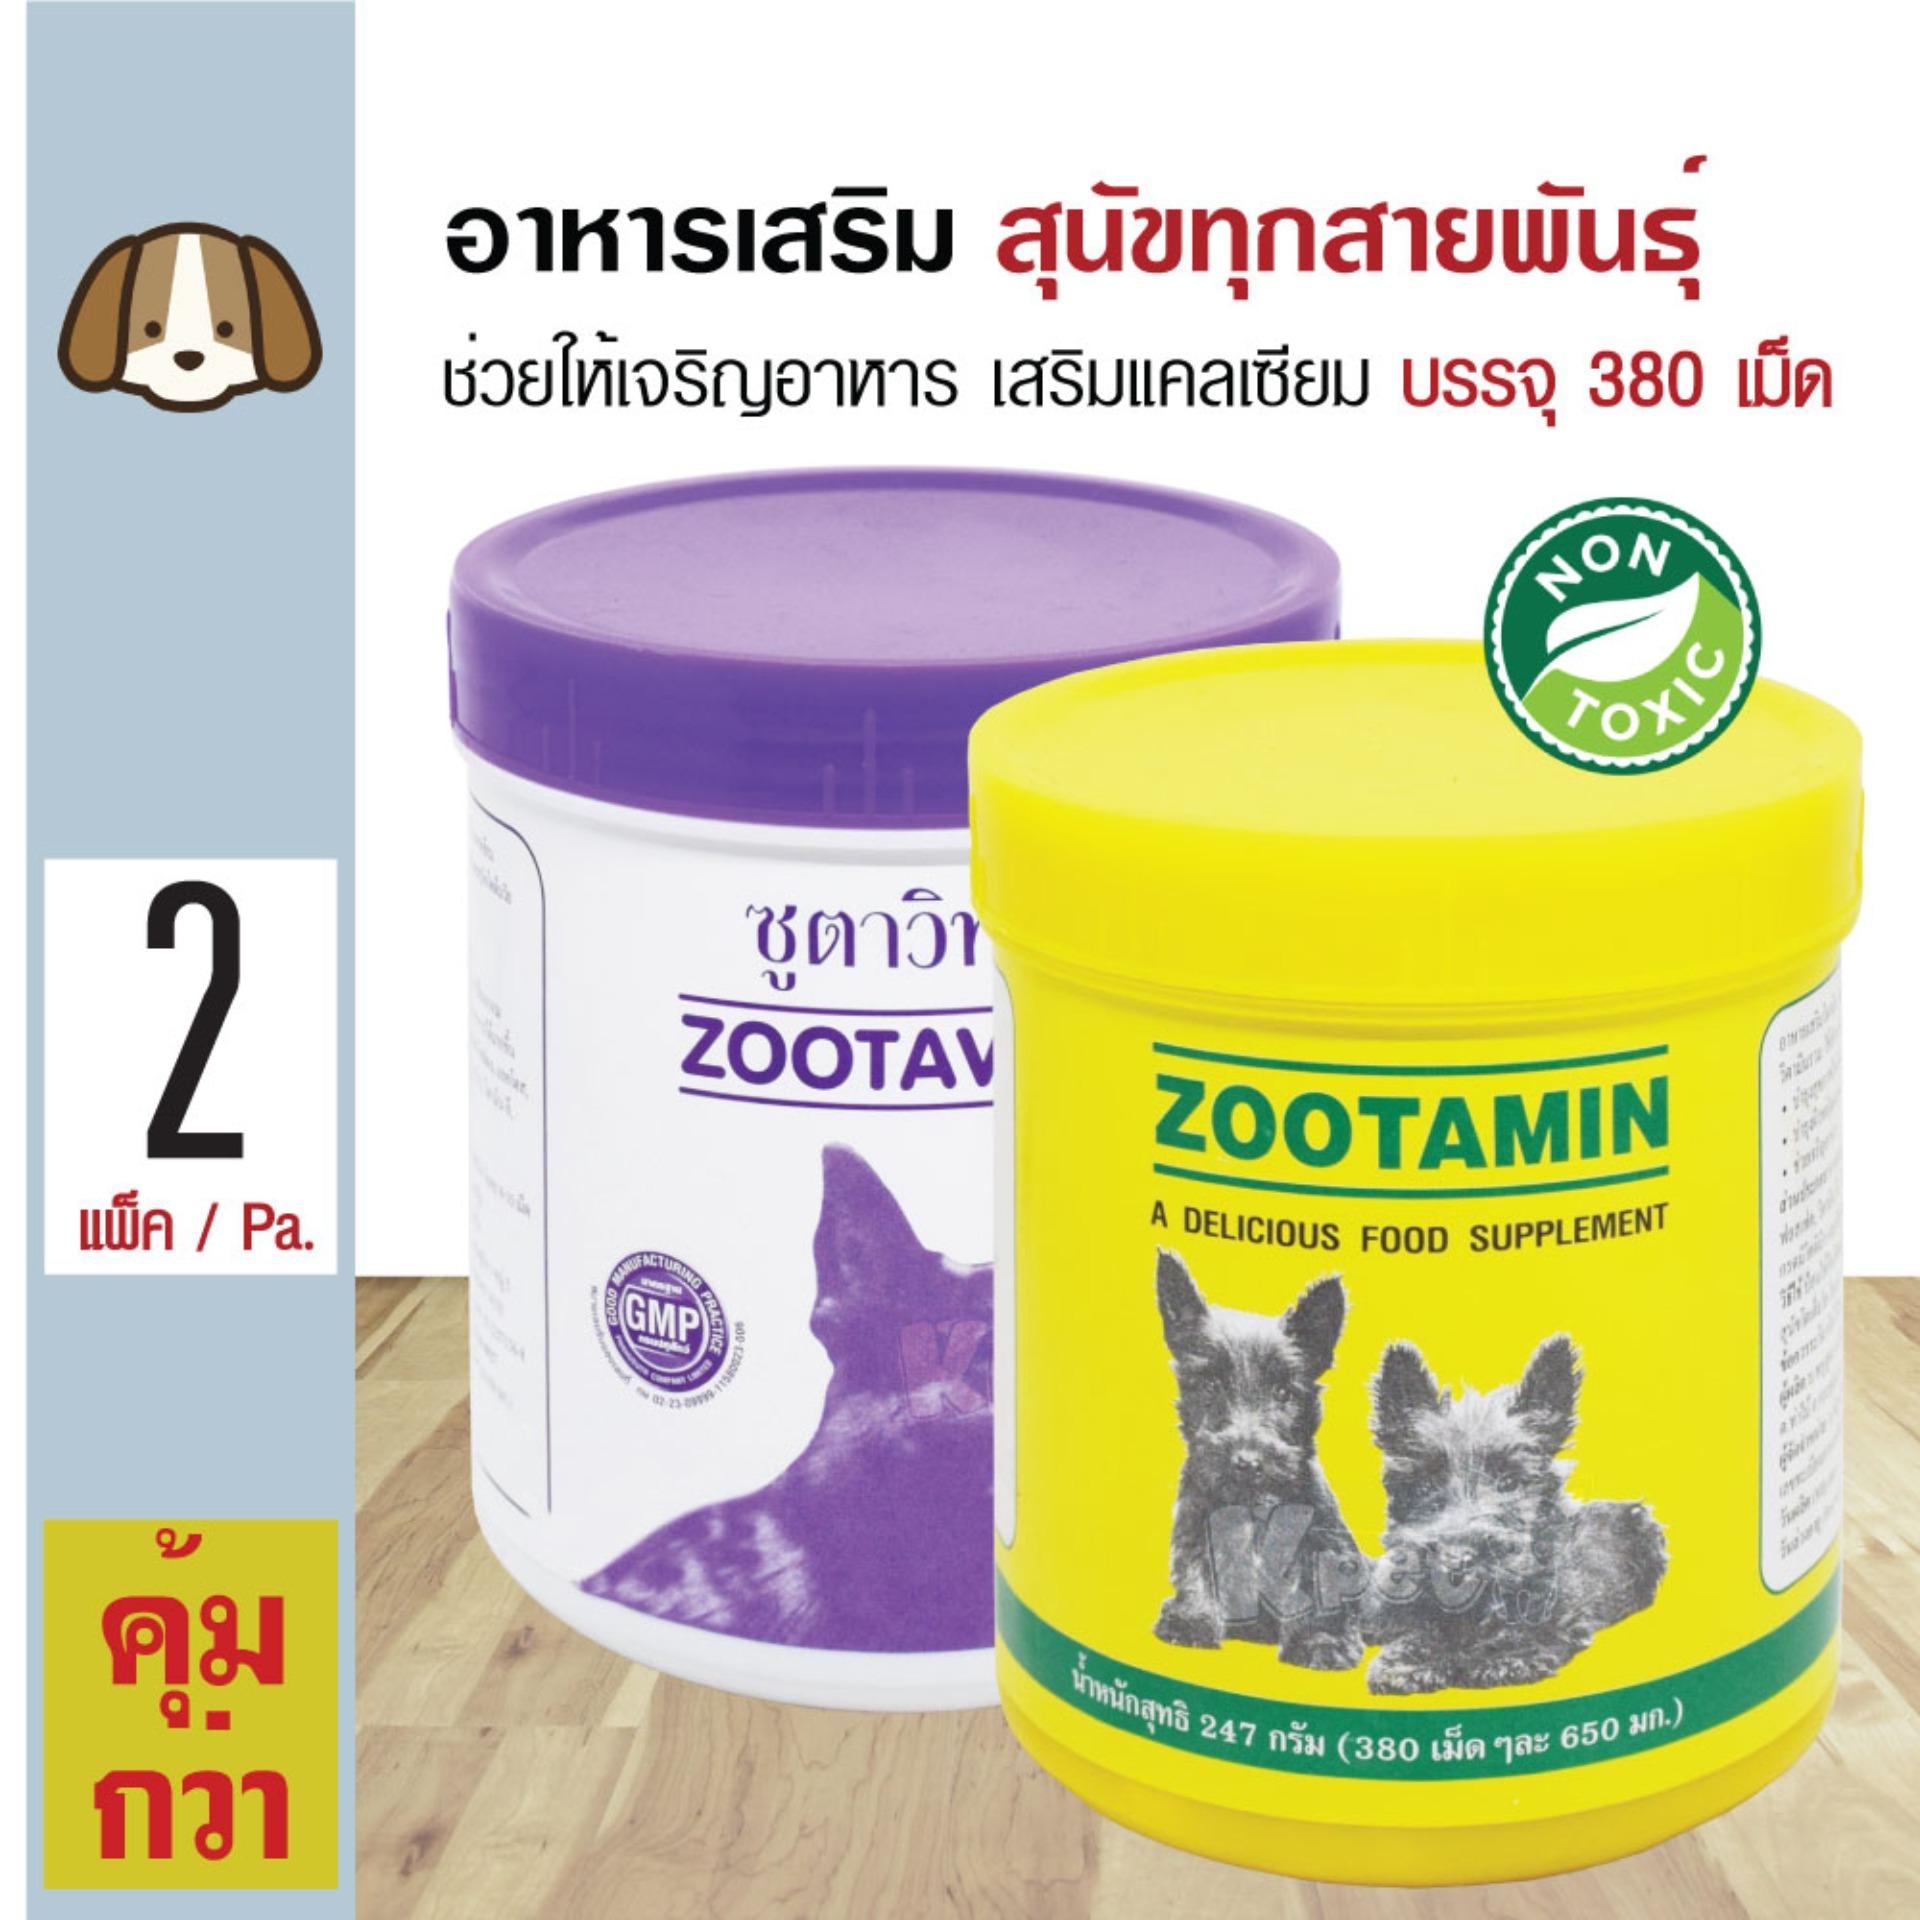 Zootamin ซูตามิน วิตามินสุนัข อาหารเสริม ช่วยให้เจริญอาหาร (380 เม็ด/กระปุก) + Zootavit ซูตาวิท เสริมแคลเซียม สำหรับสุนัขทุกสายพันธุ์ (380 เม็ด/กระปุก)